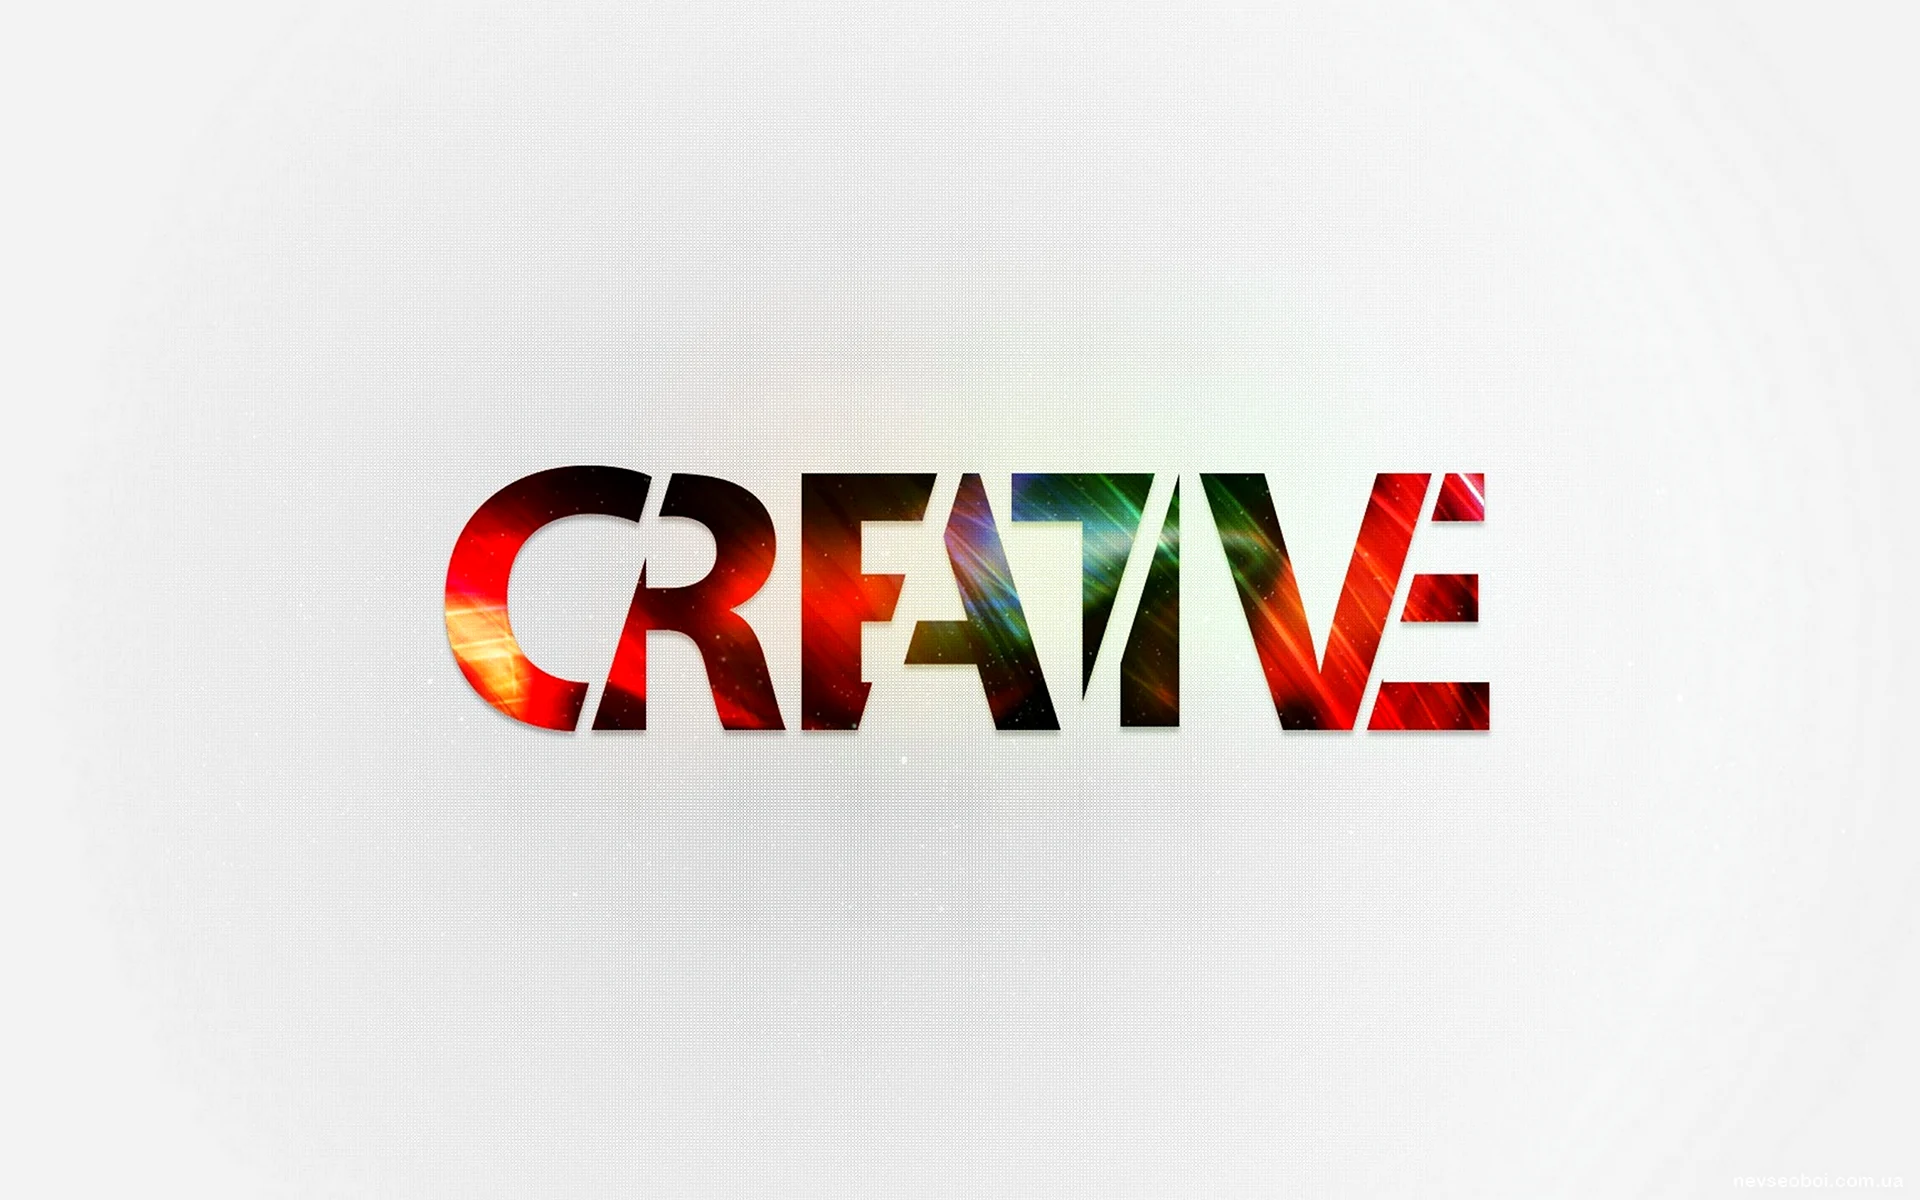 Креативные логотипы